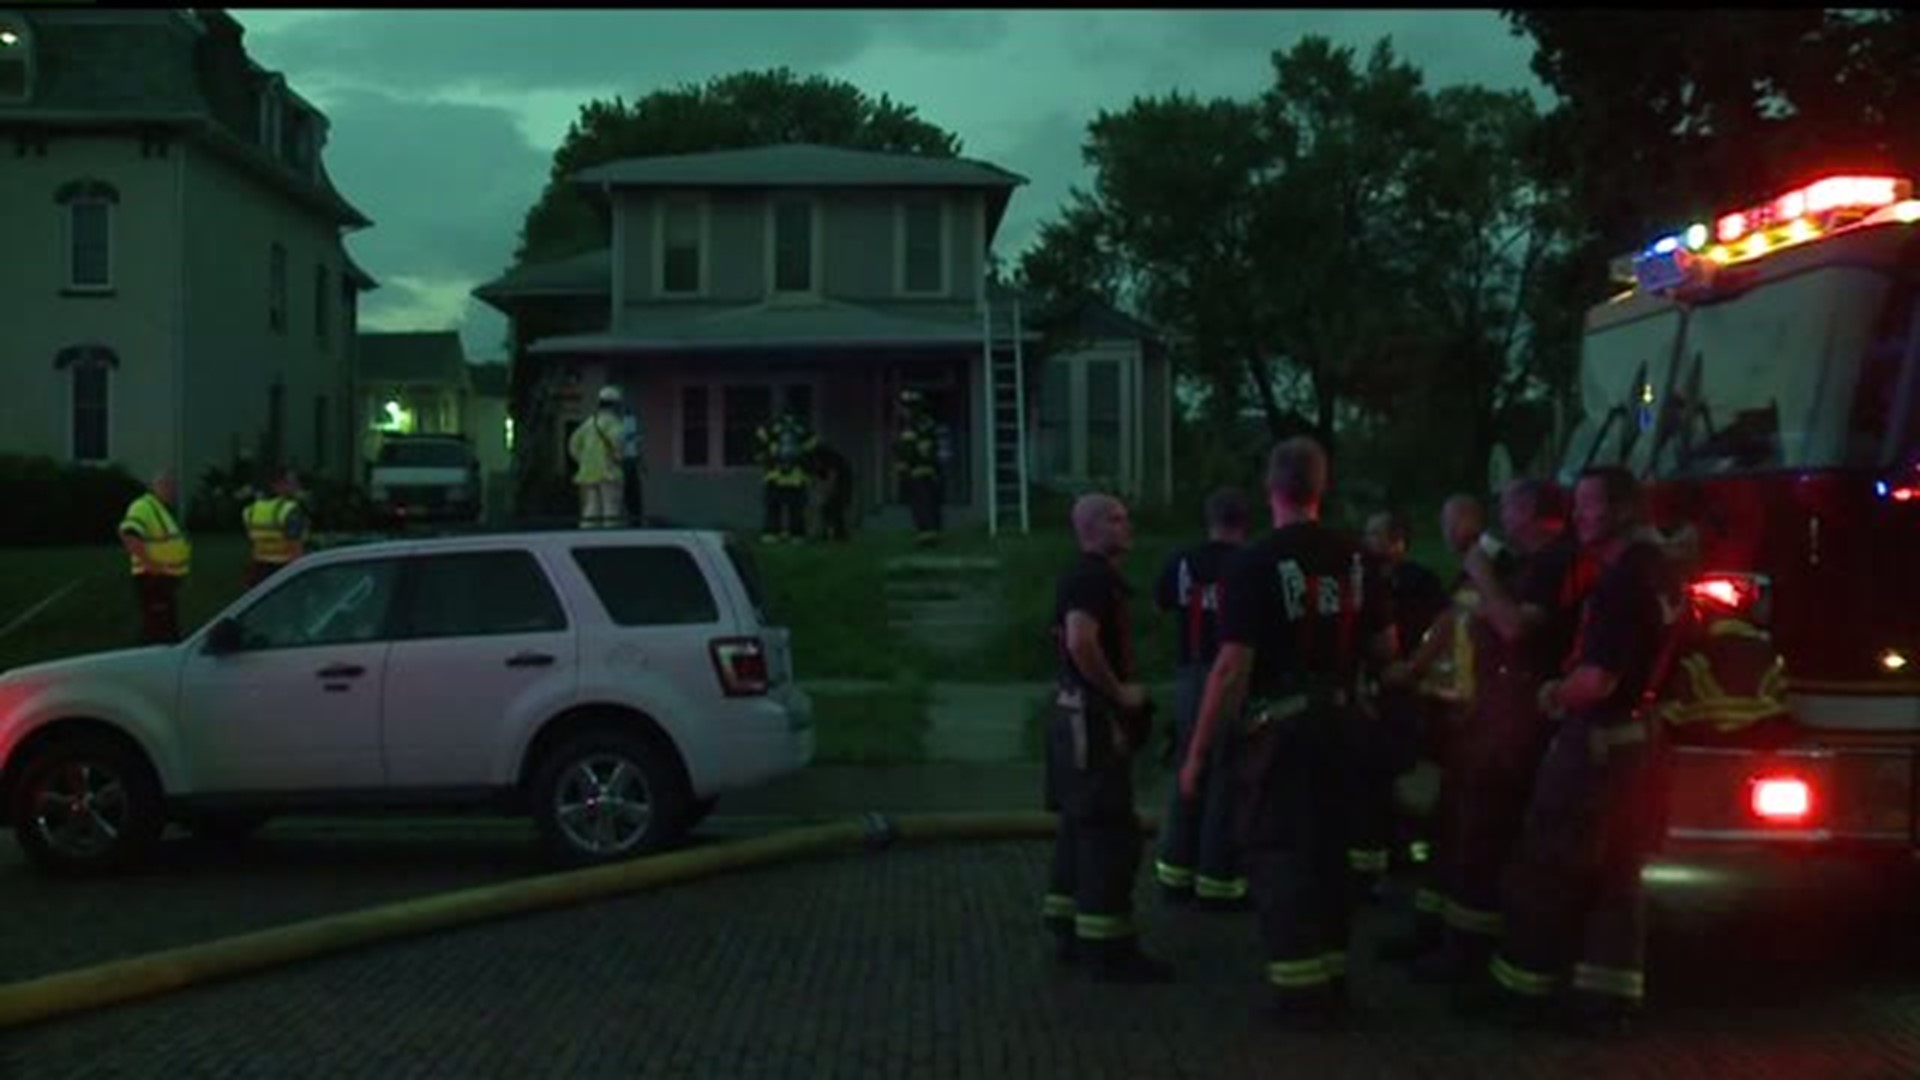 Davenport home fire considered arson